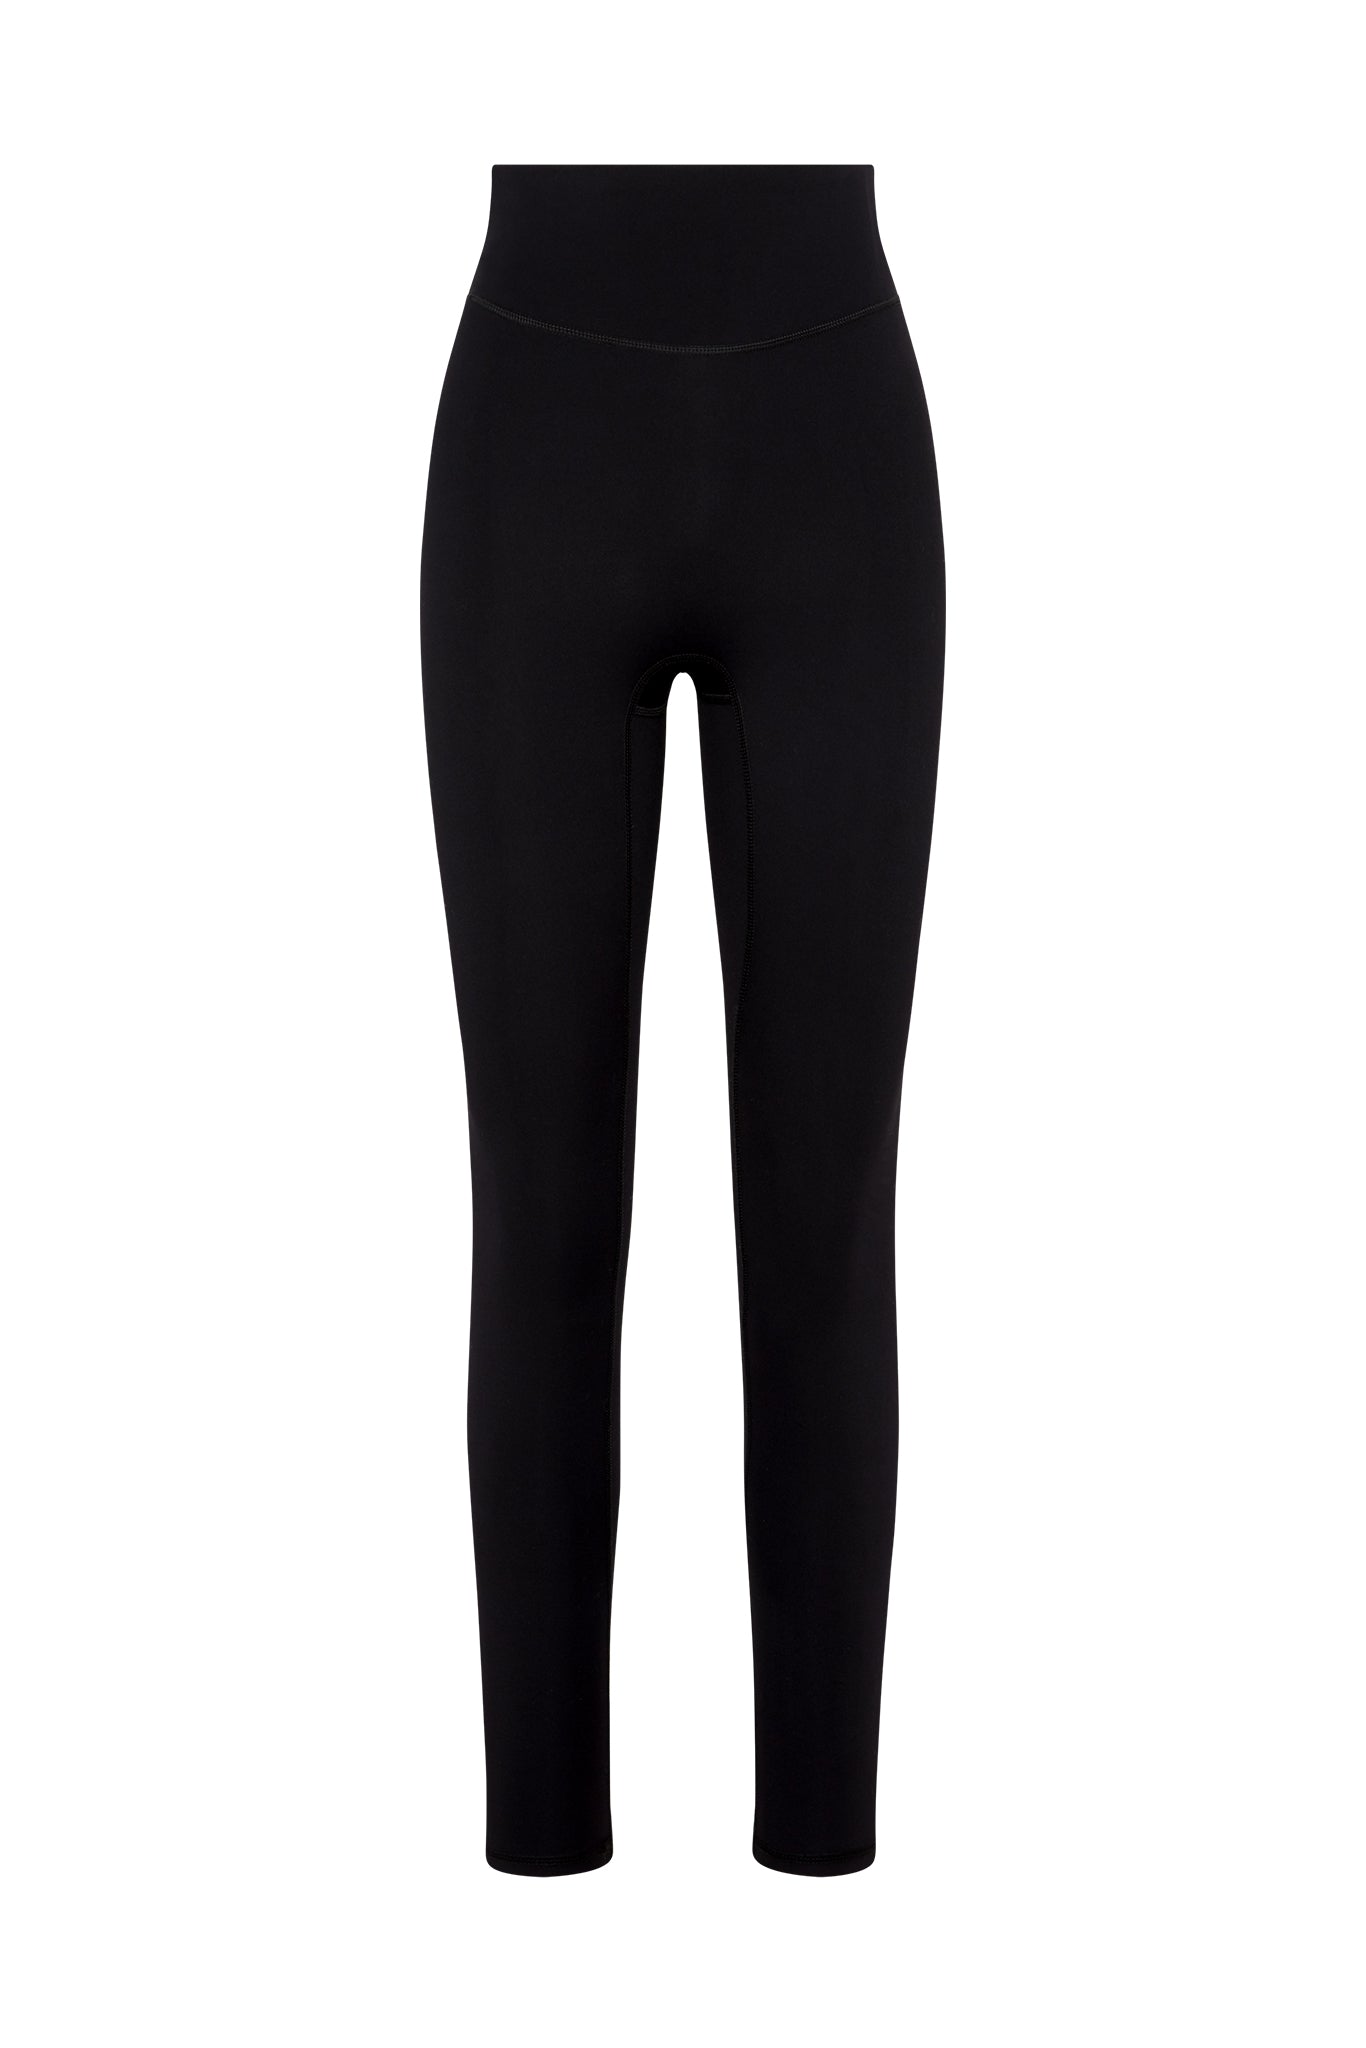 Acadia Long Legging 29 - Black – Monday Swimwear